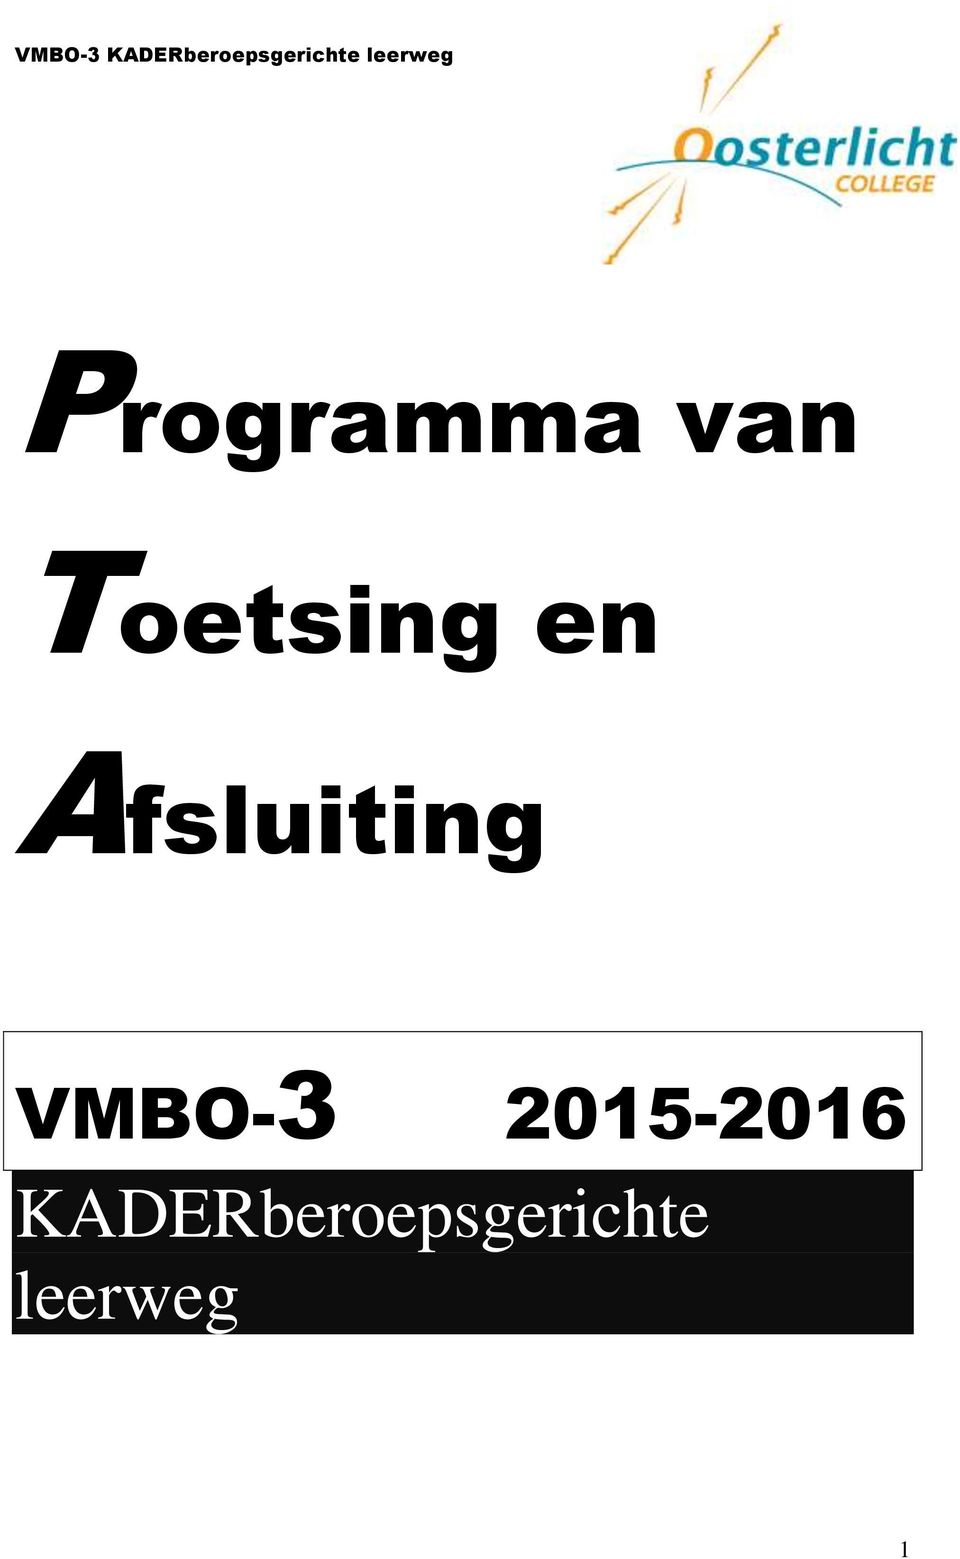 VMBO-3 2015-2016